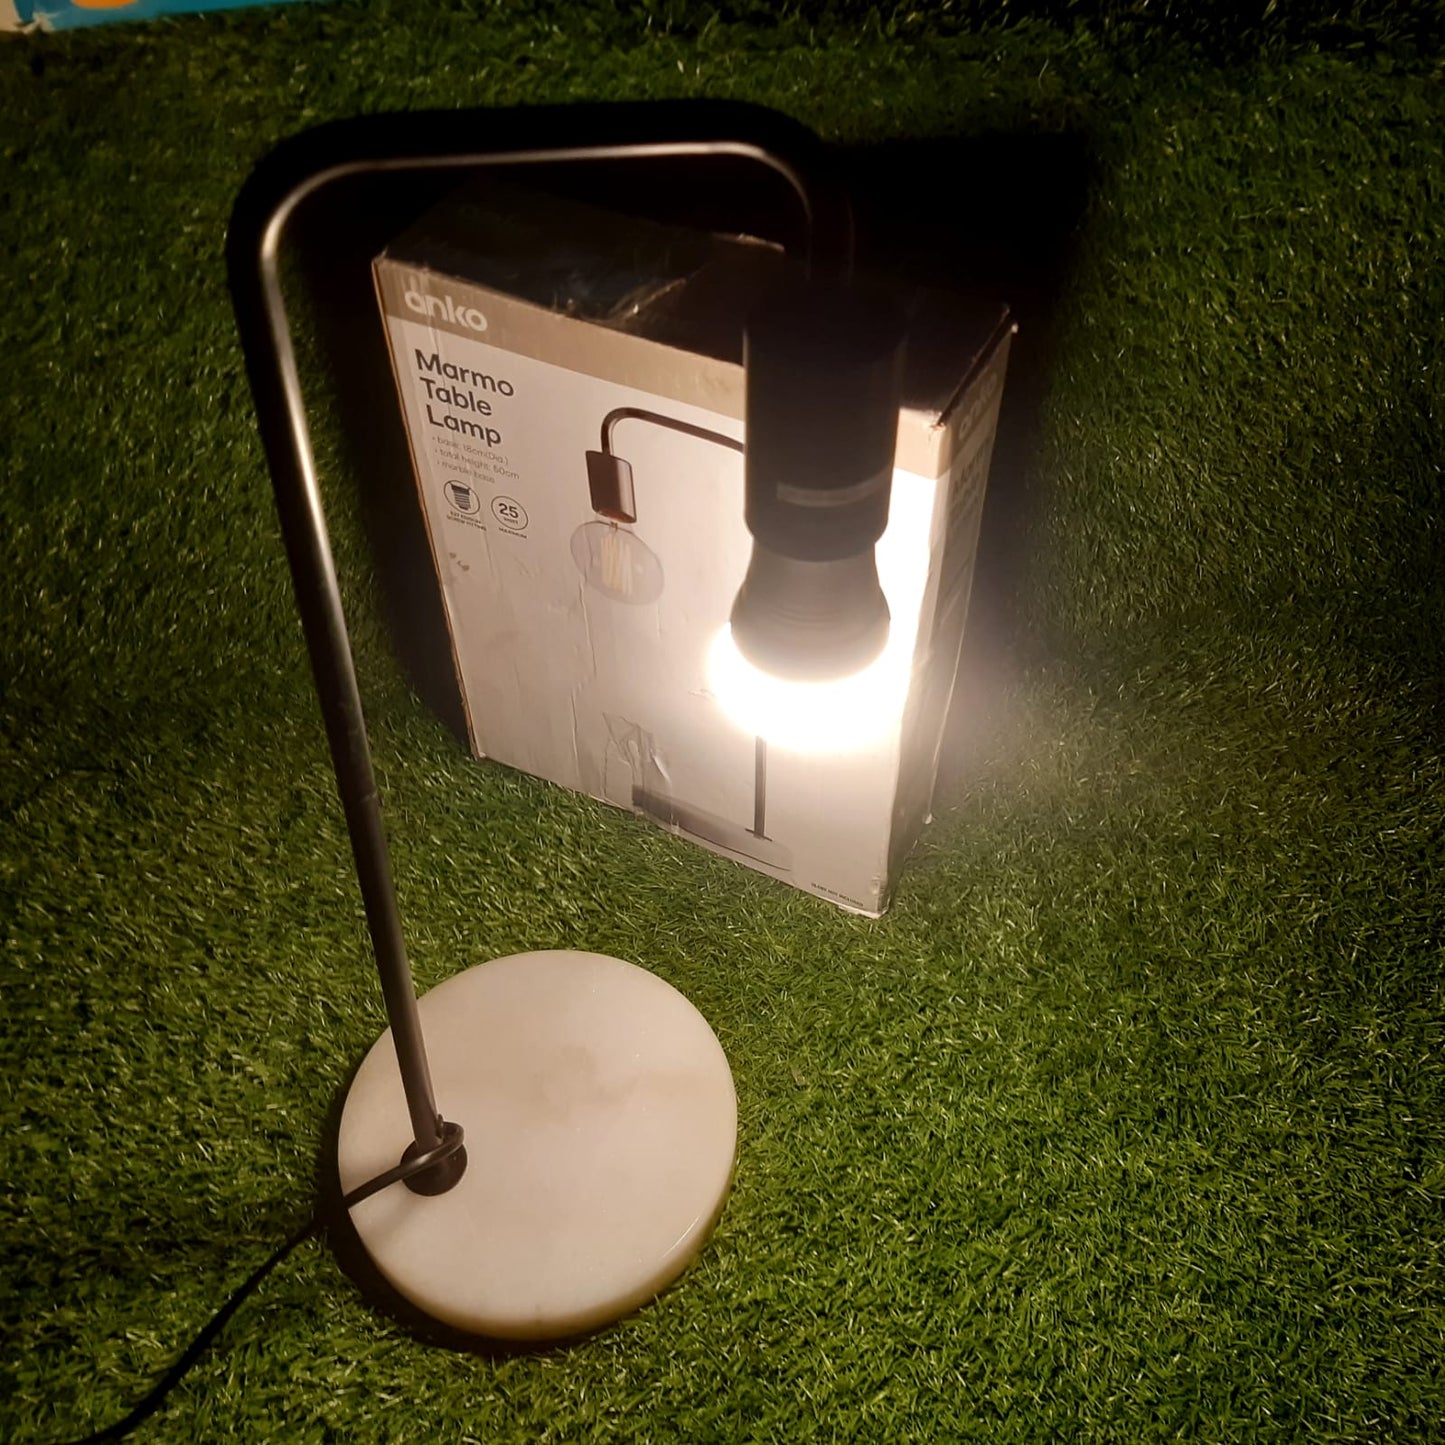 Anko | Marmo Table Lamp